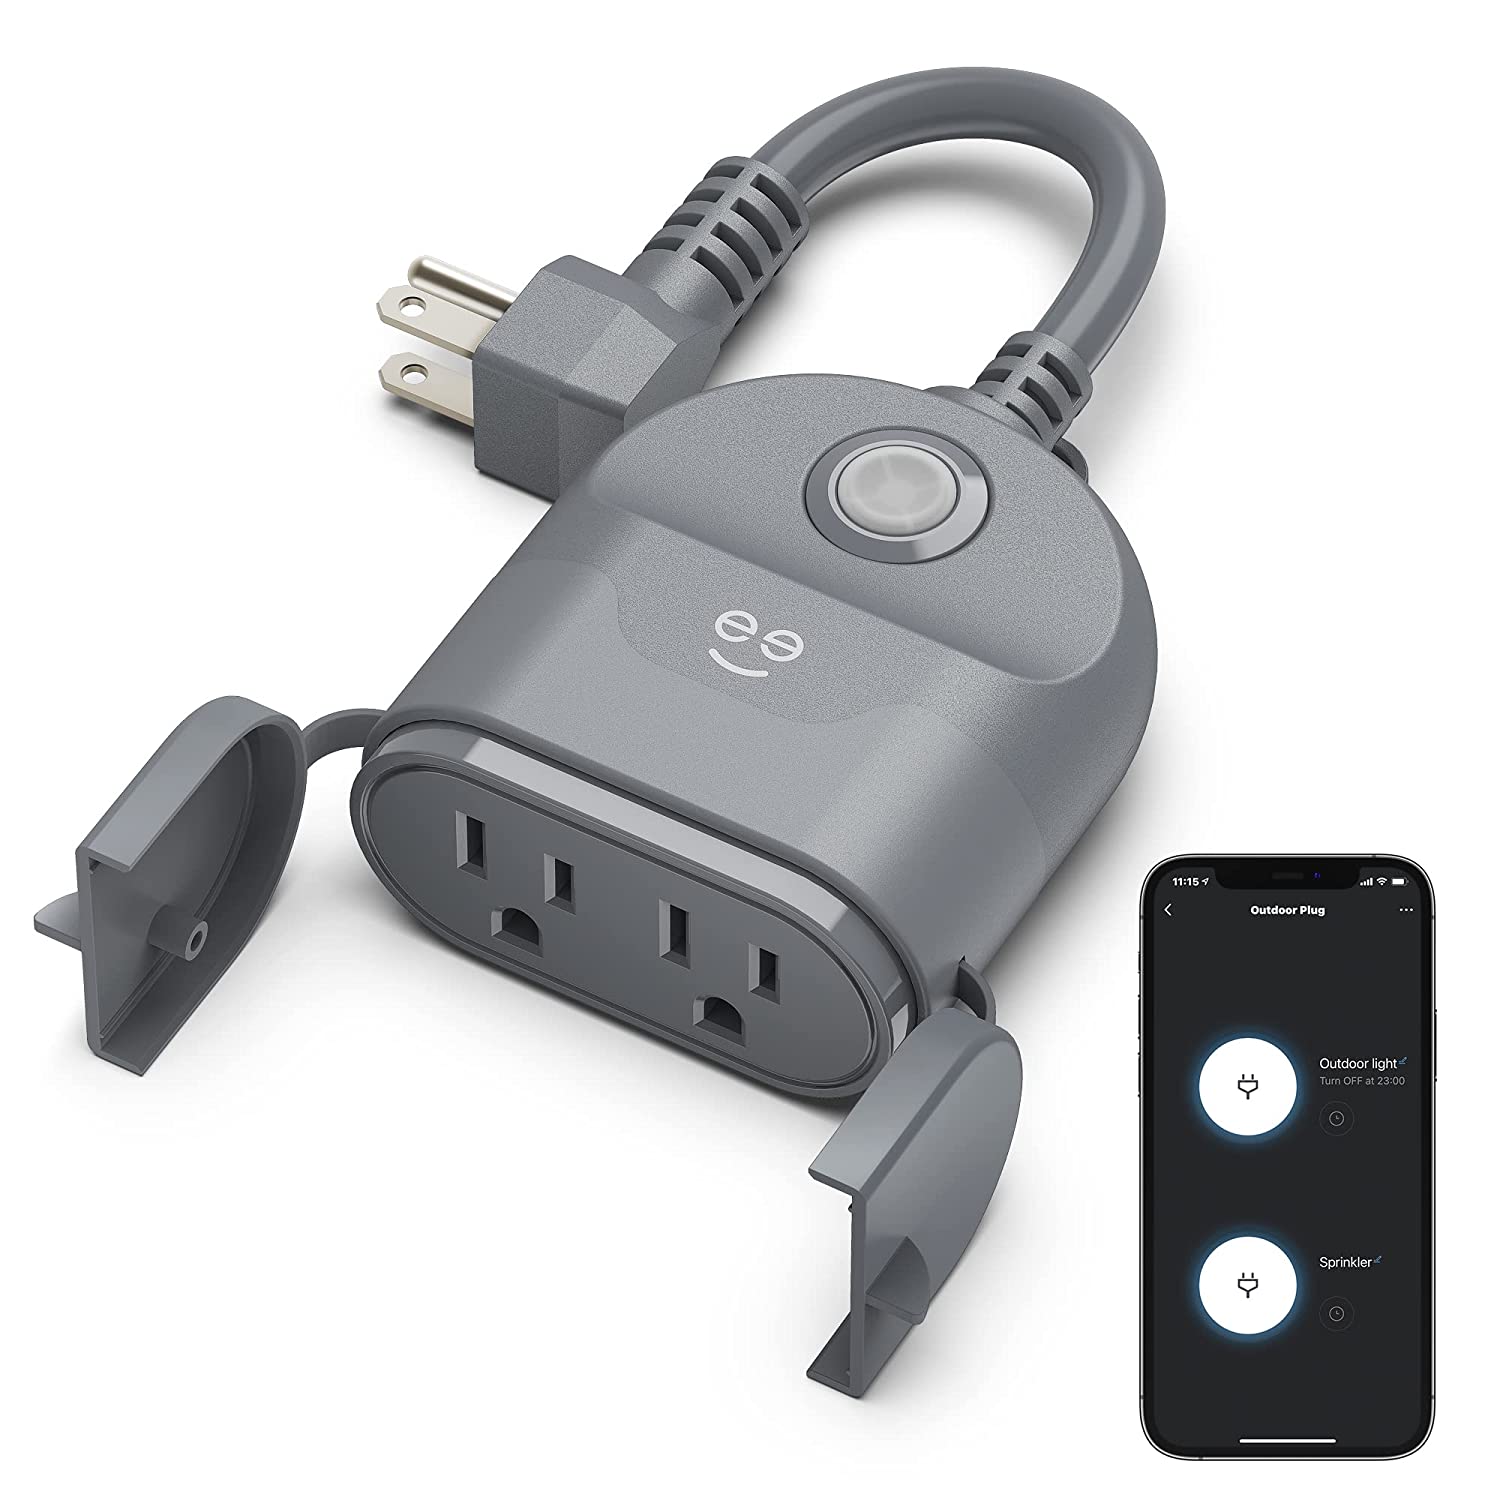 Geeni Smart Plug Smart Socket for Alexa and The Google Assistant